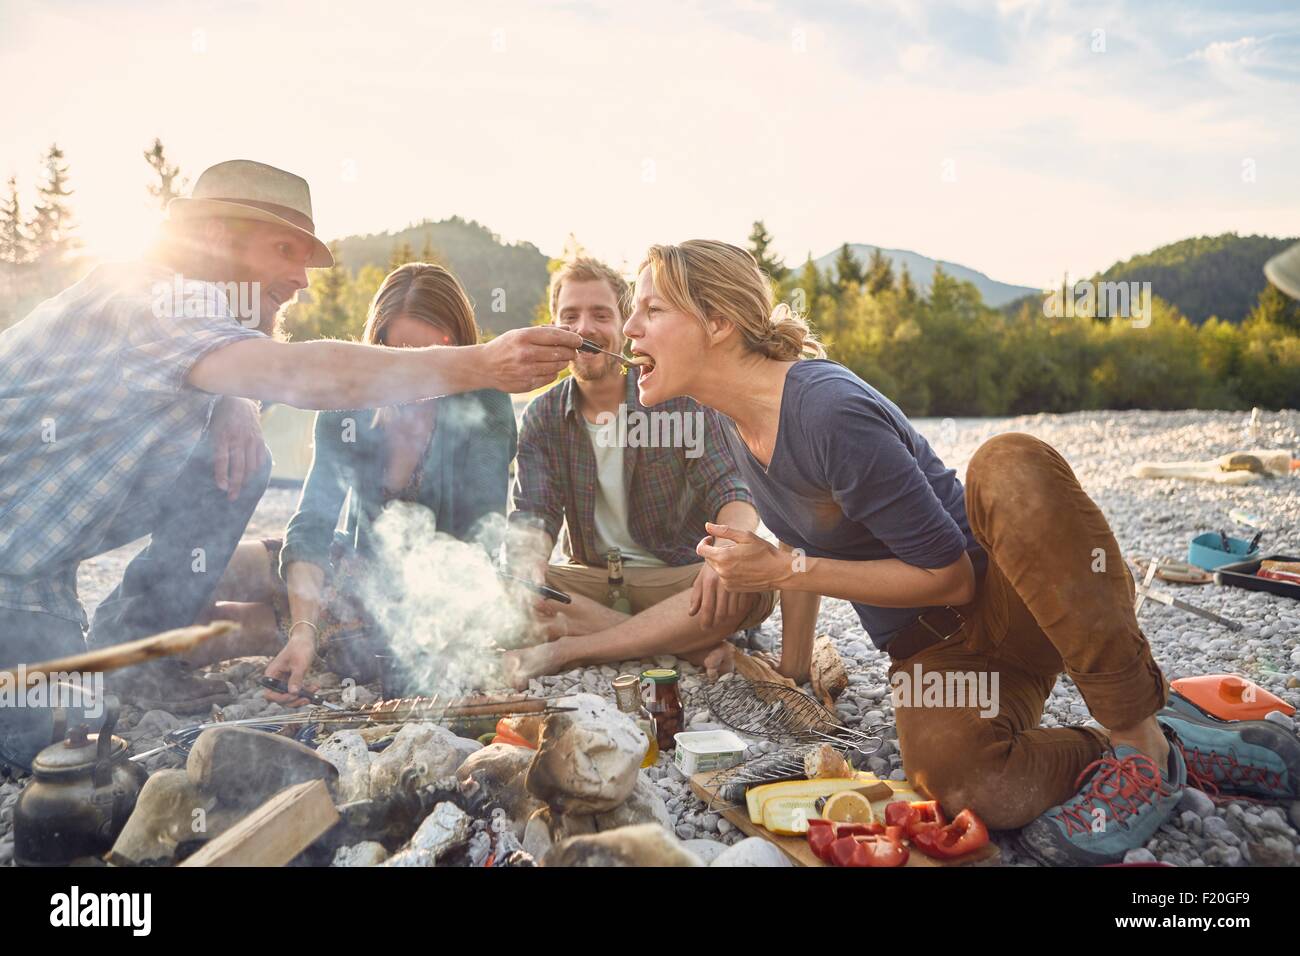 Mid adult man feeding mature woman across a campfire Stock Photo